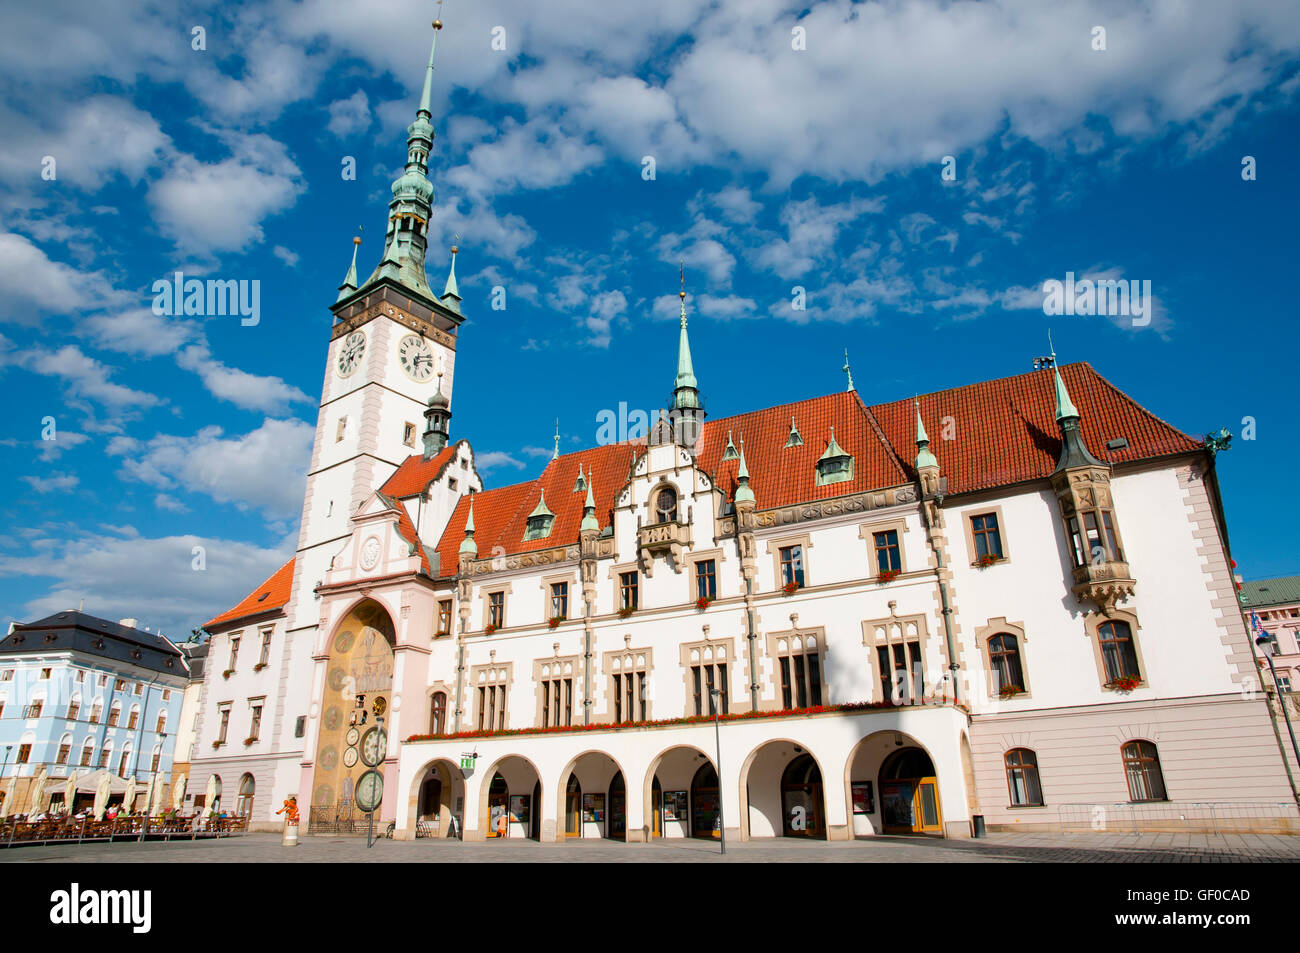 City Hall - Olomouc - Czech Republic Stock Photo